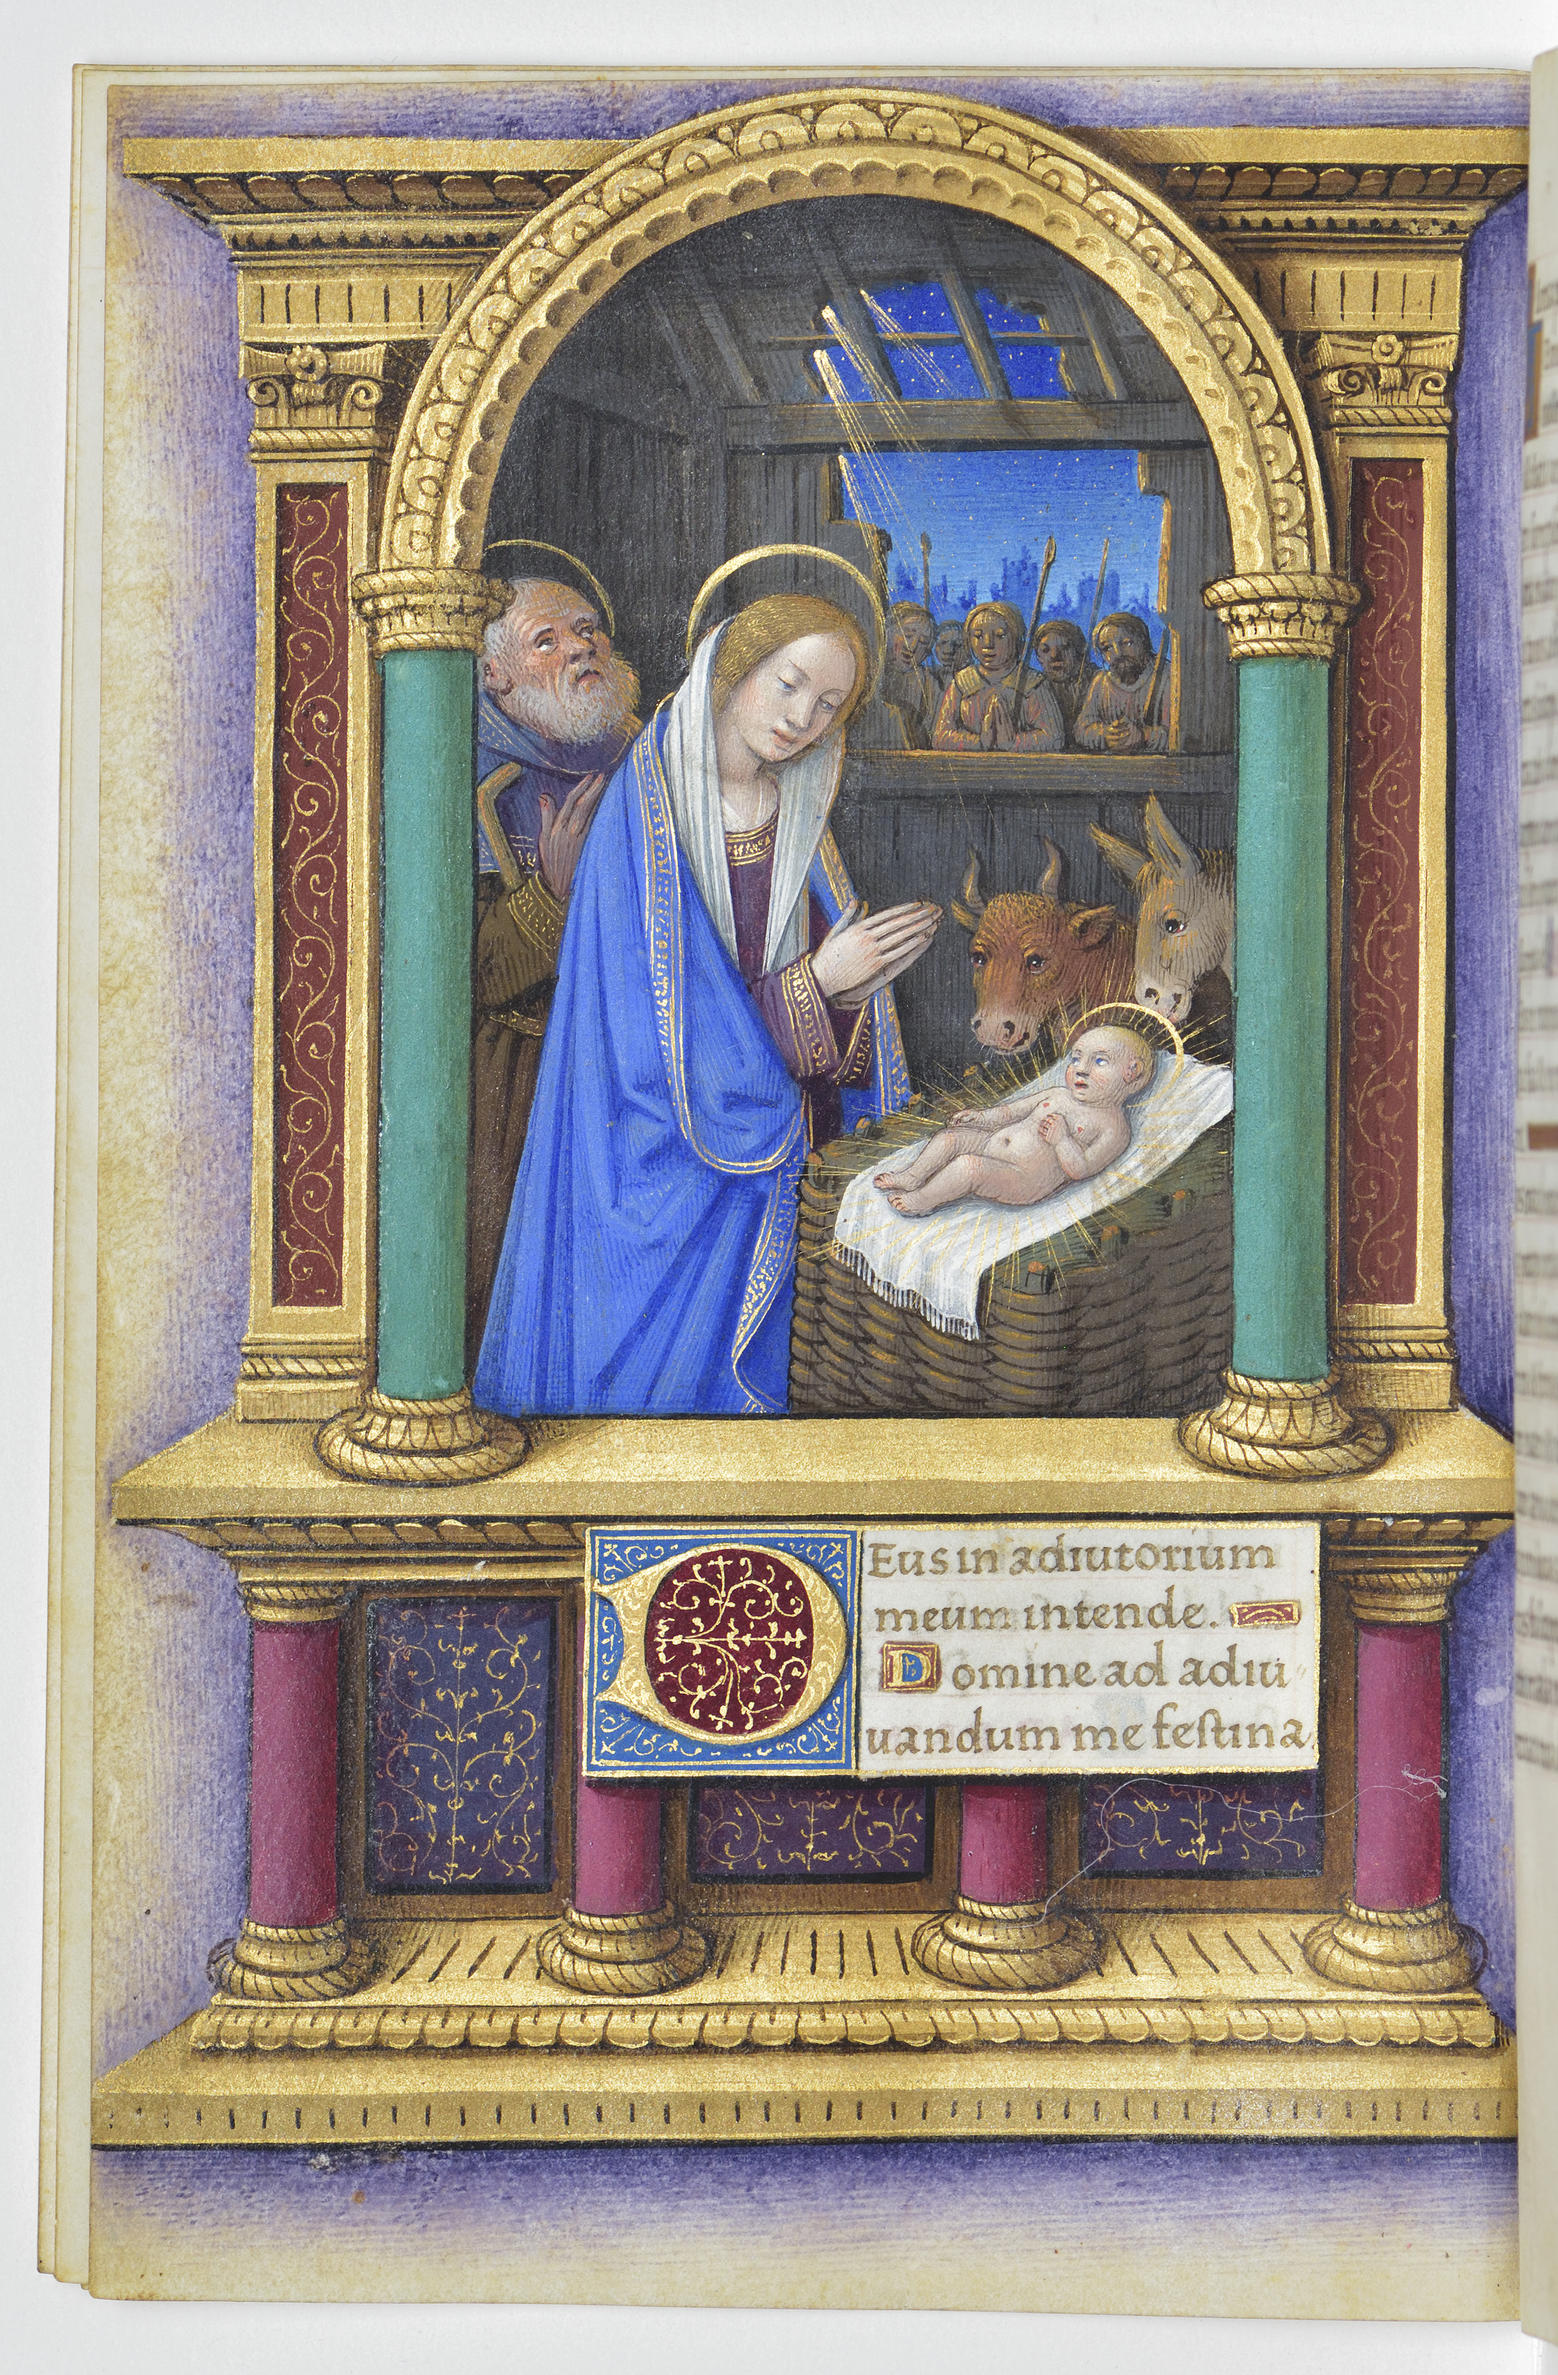 Jean Bourdichon (French, 1490-1515, illuminator), Book of Hours: The Nativity, 1490-1515.